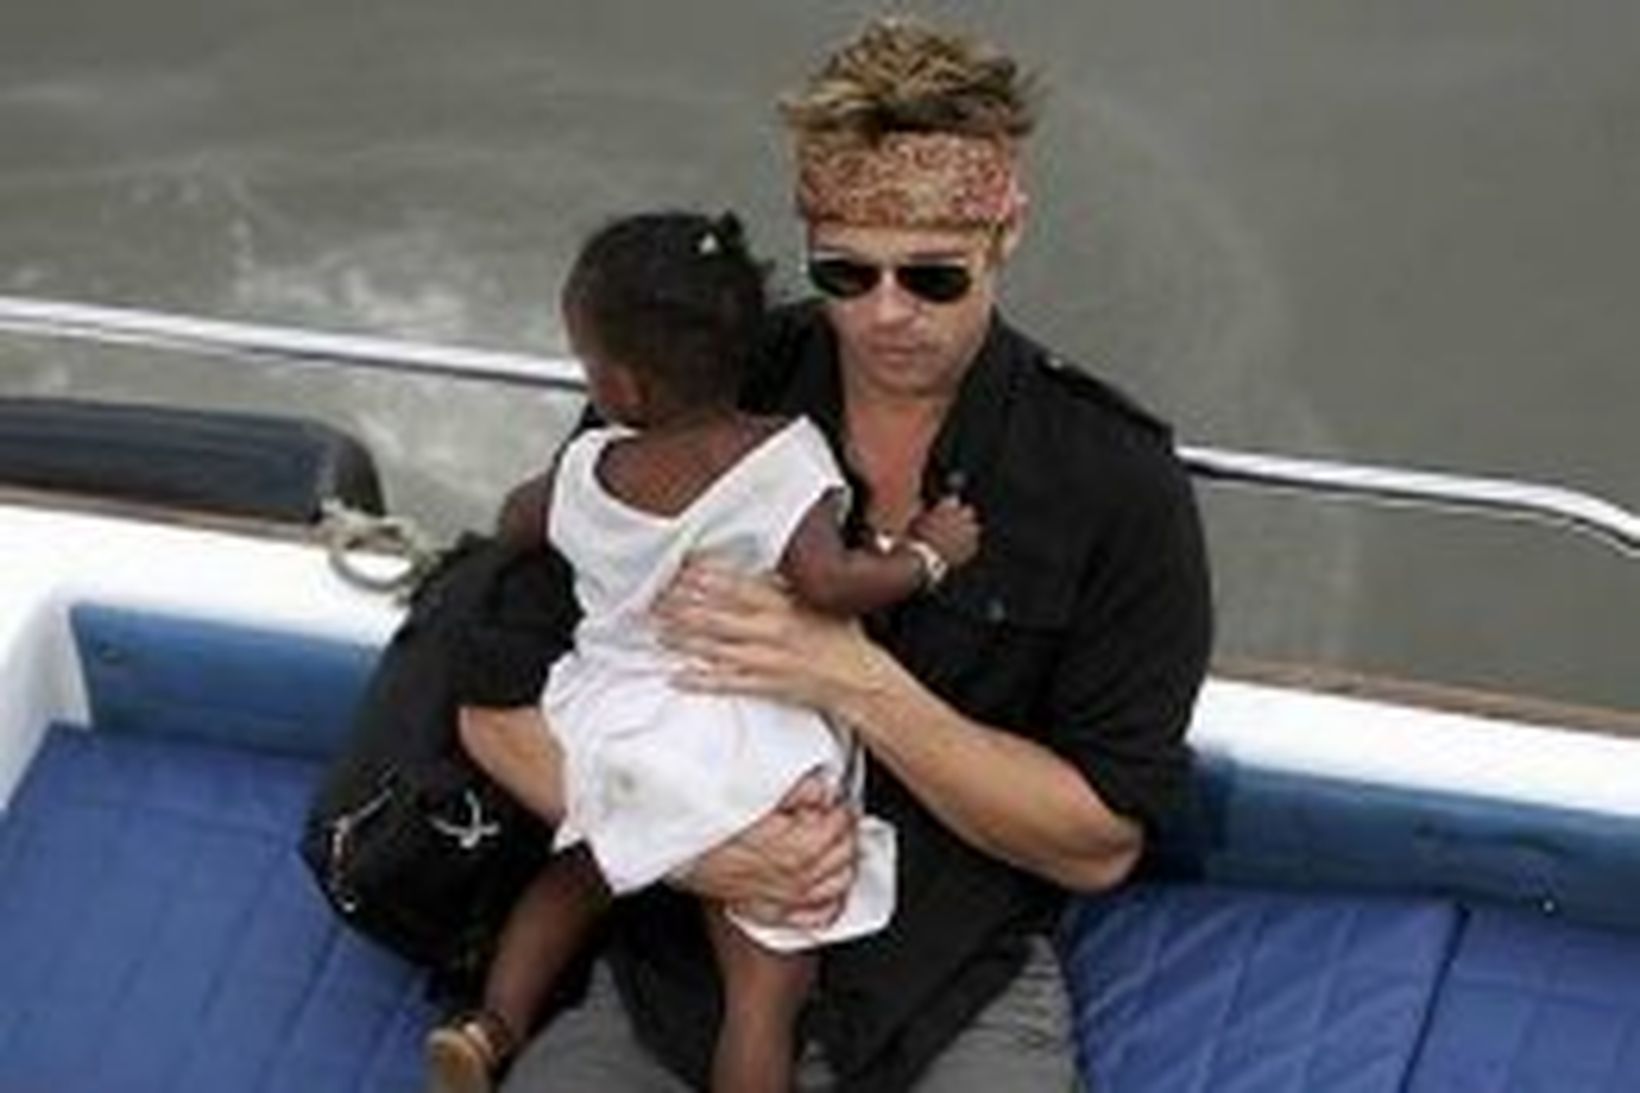 Brad Pitt ásamt dóttur sinni Zahara.